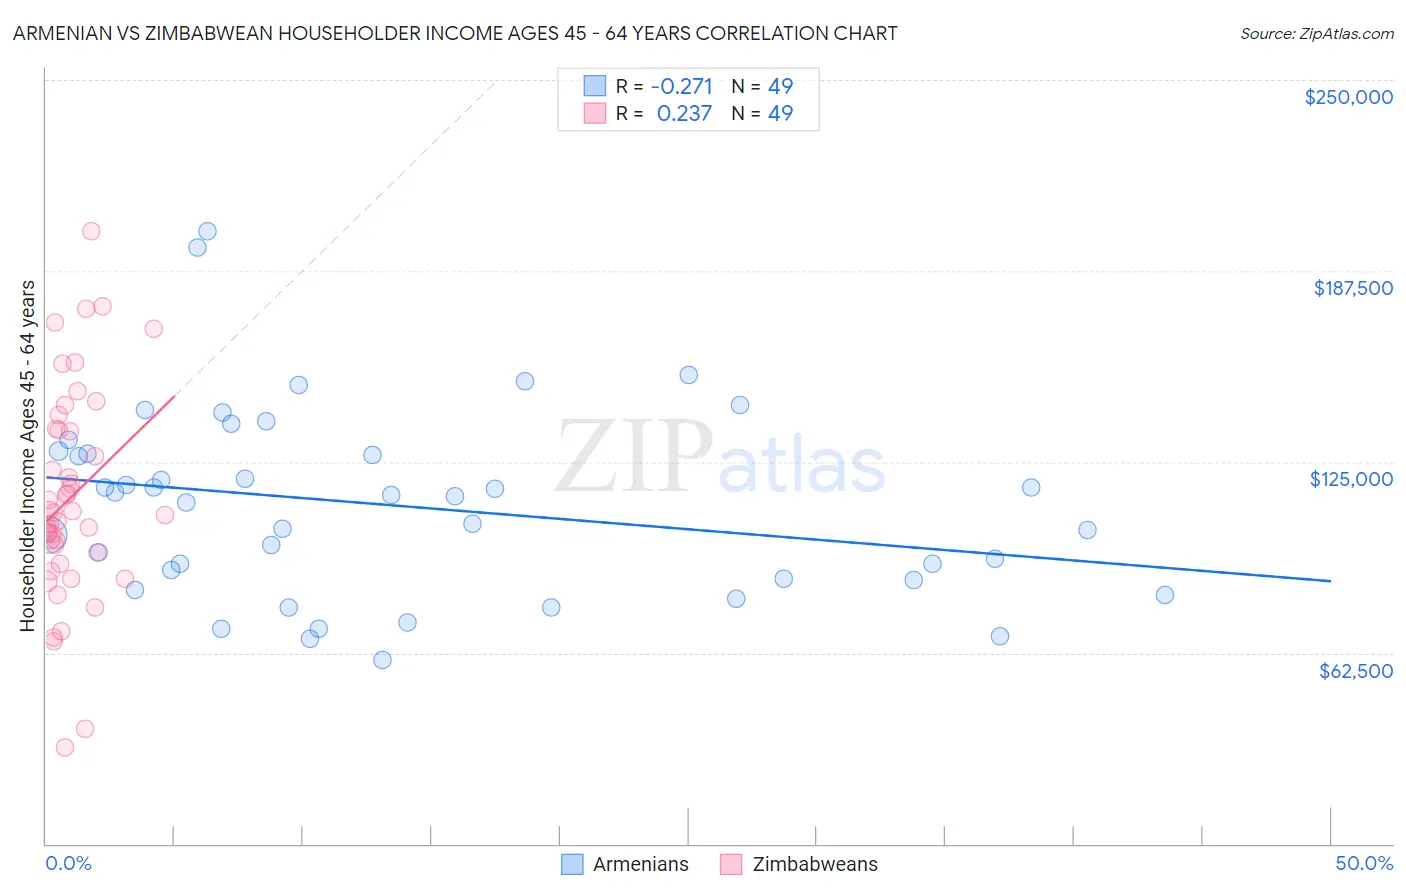 Armenian vs Zimbabwean Householder Income Ages 45 - 64 years